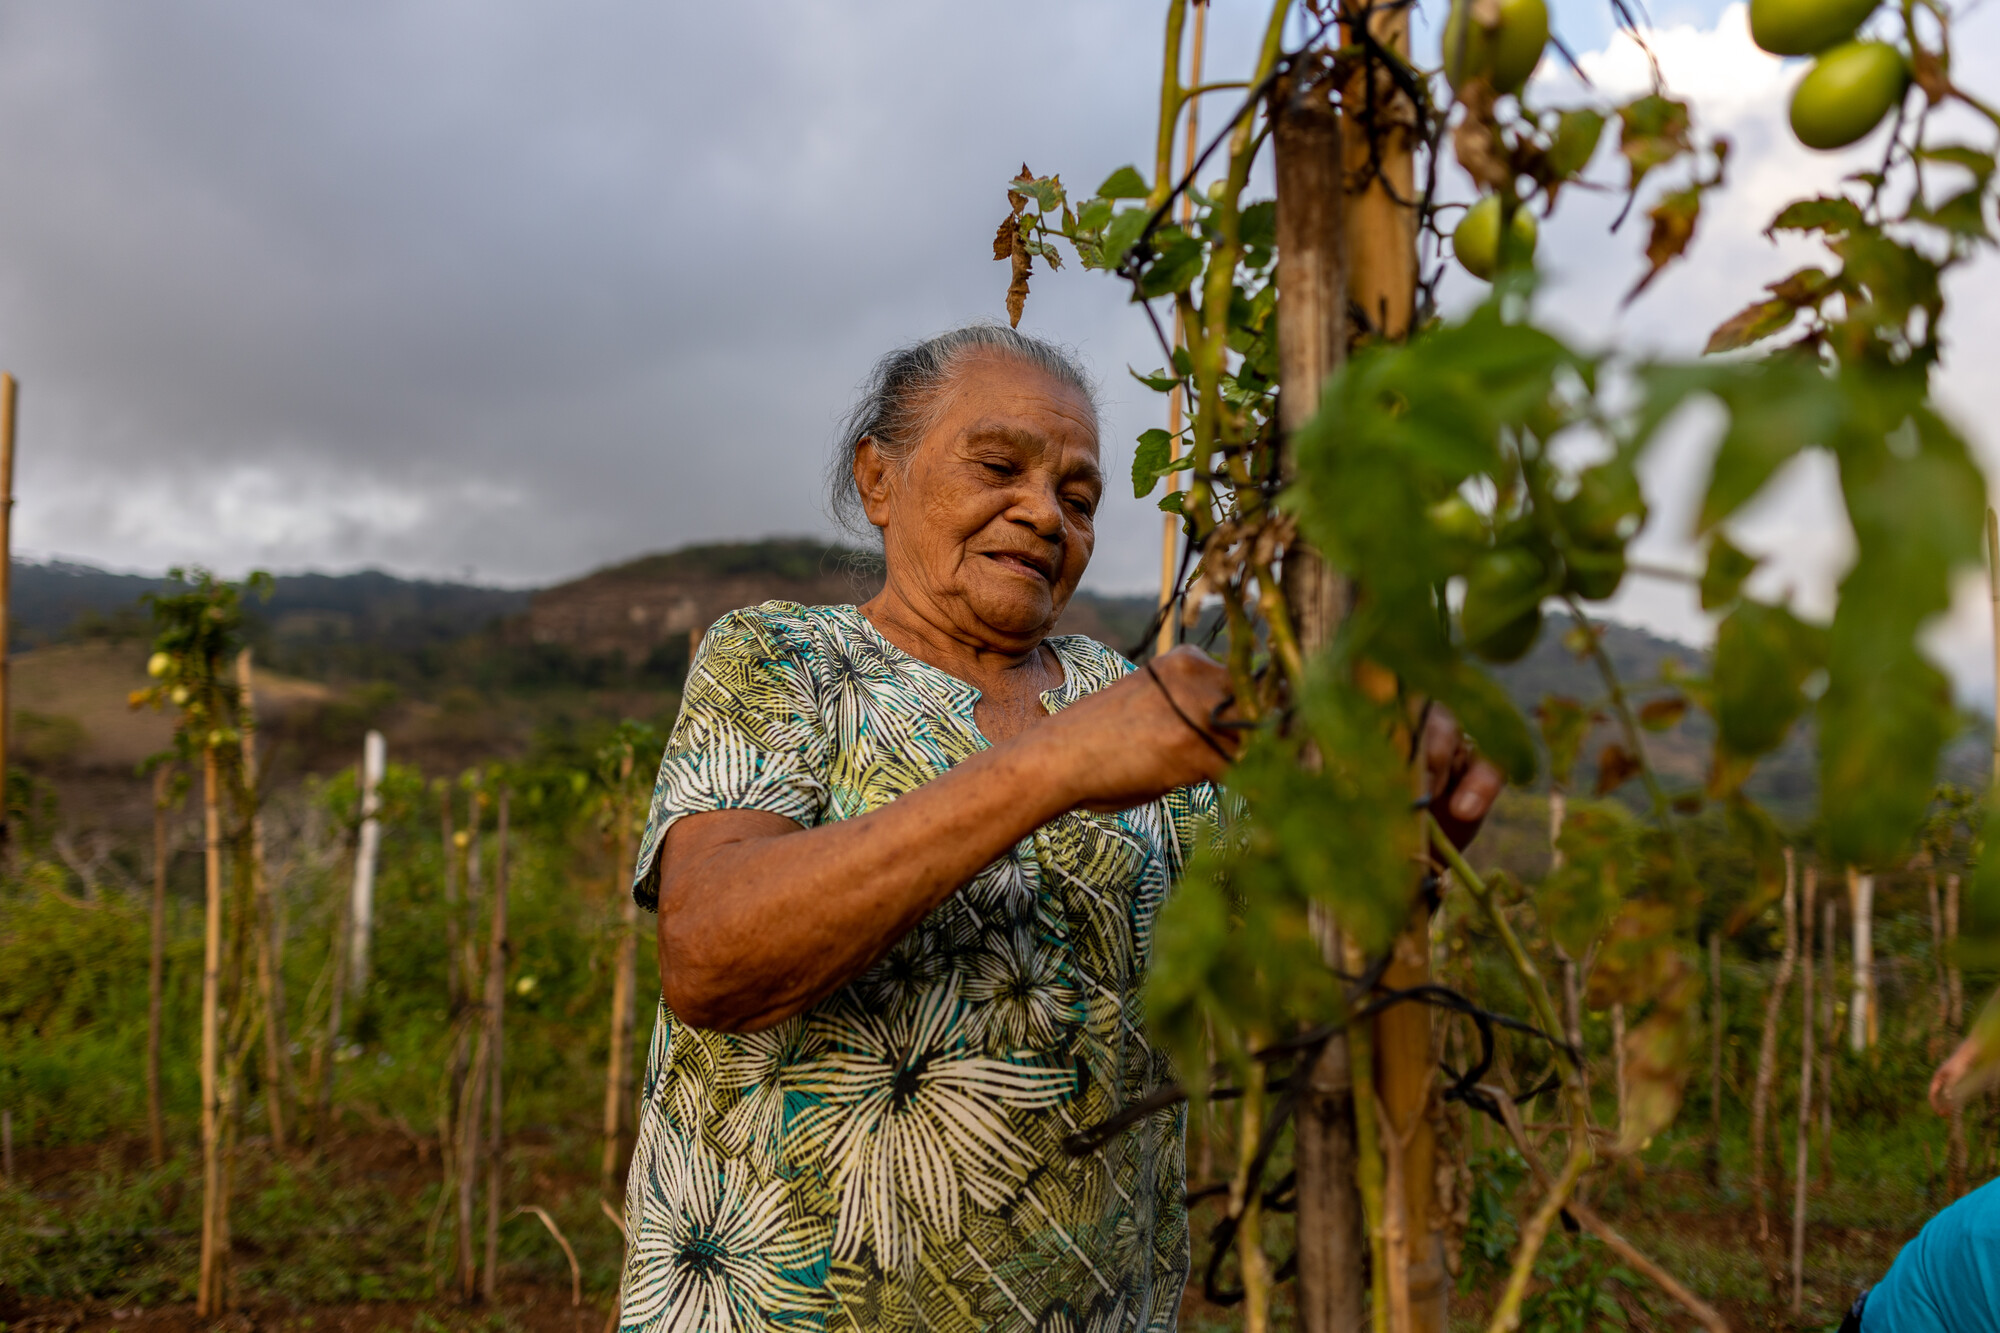 An older Salvadoran woman works in a field